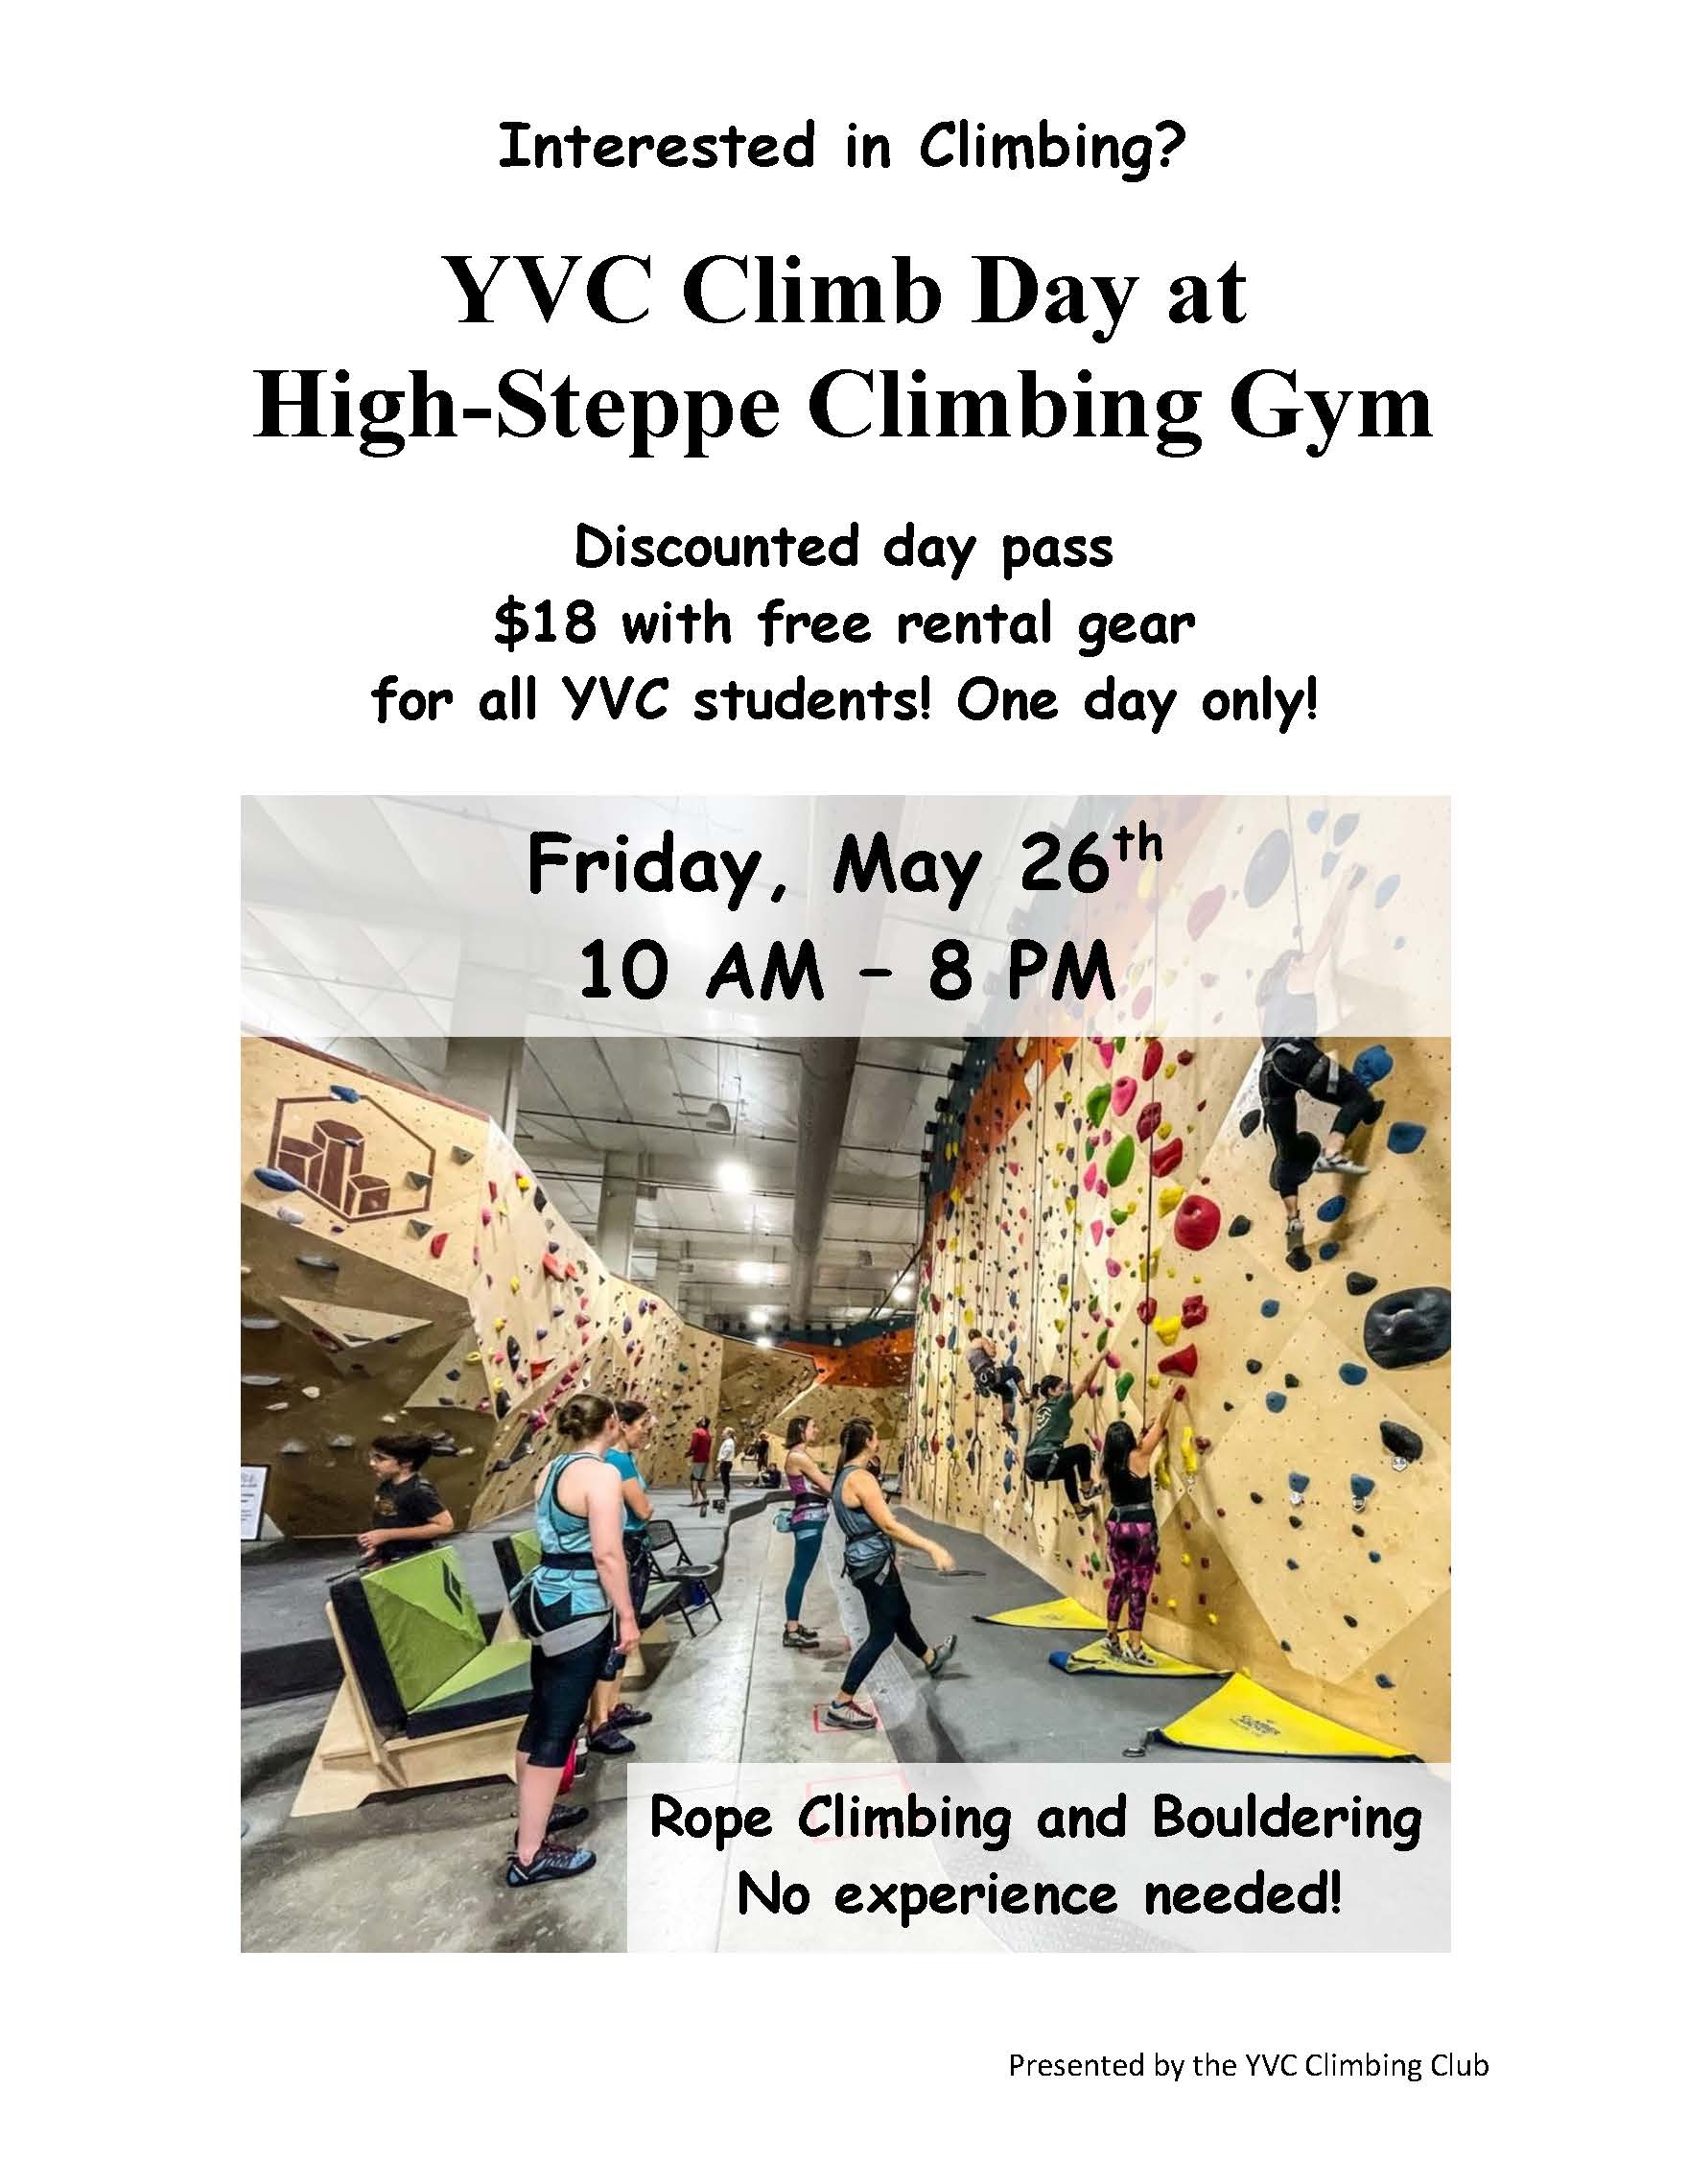 YVC Climbing Day Poster